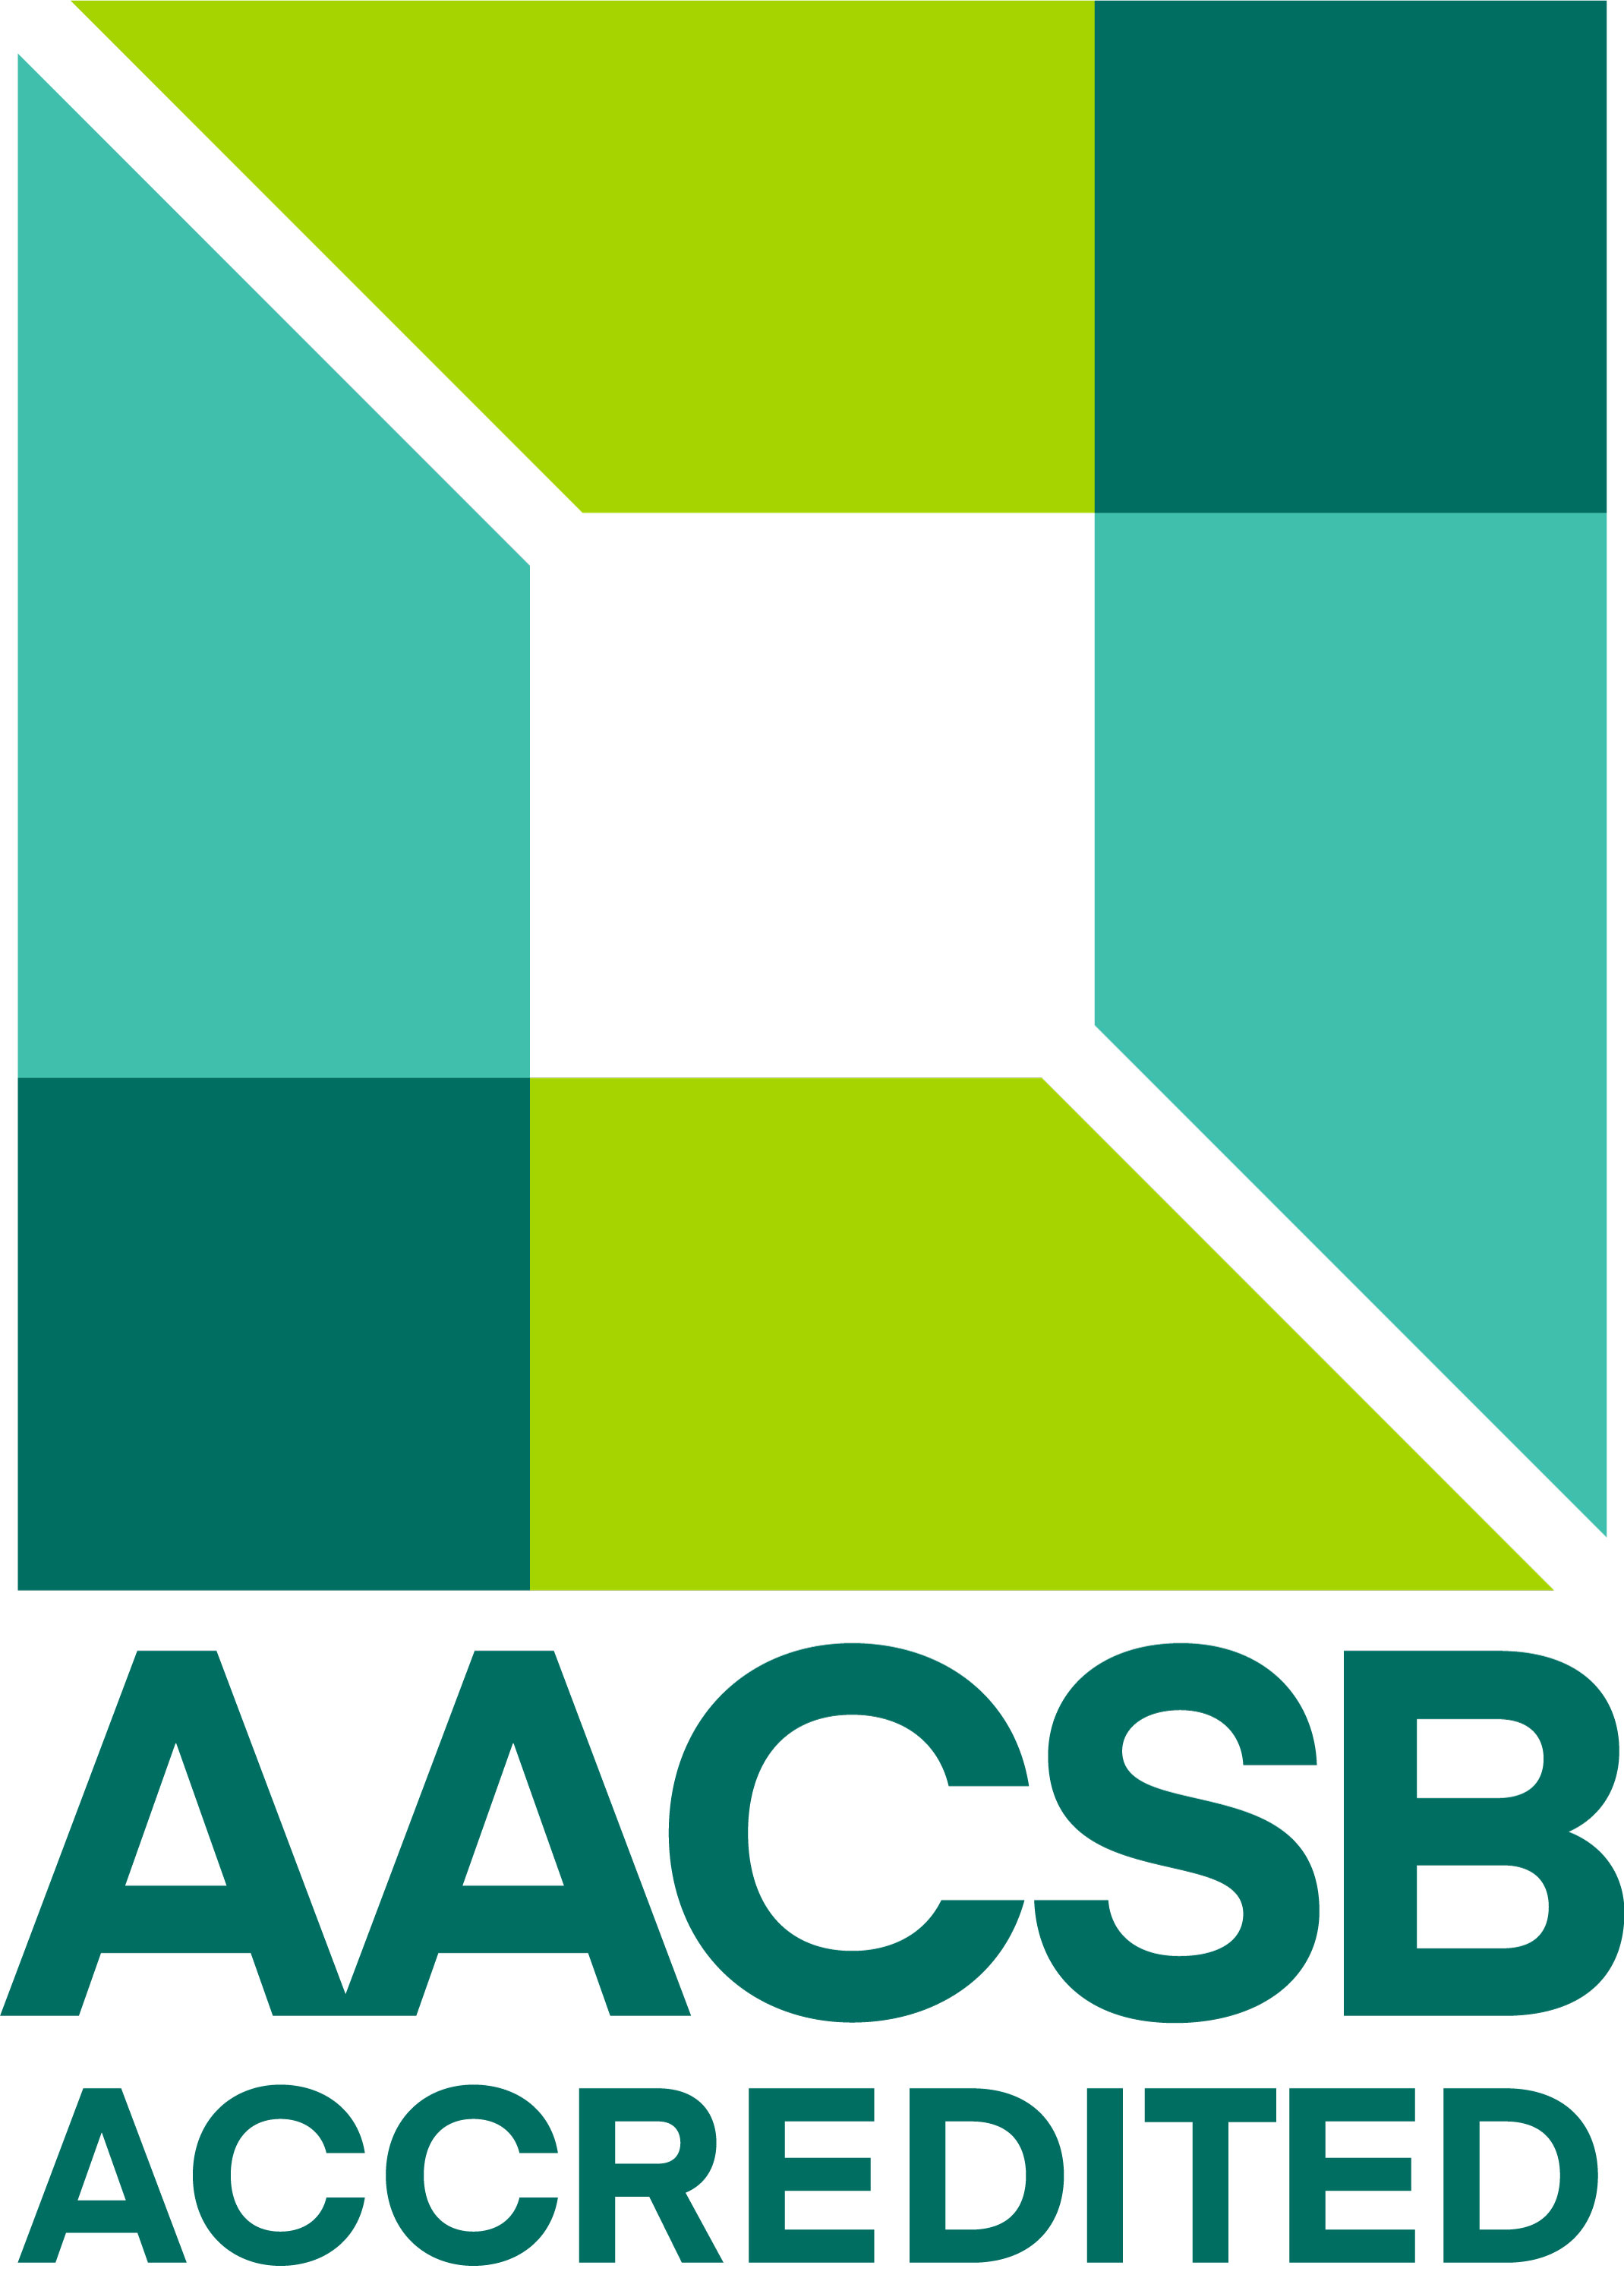 AACSB logo: AACSB Accredited